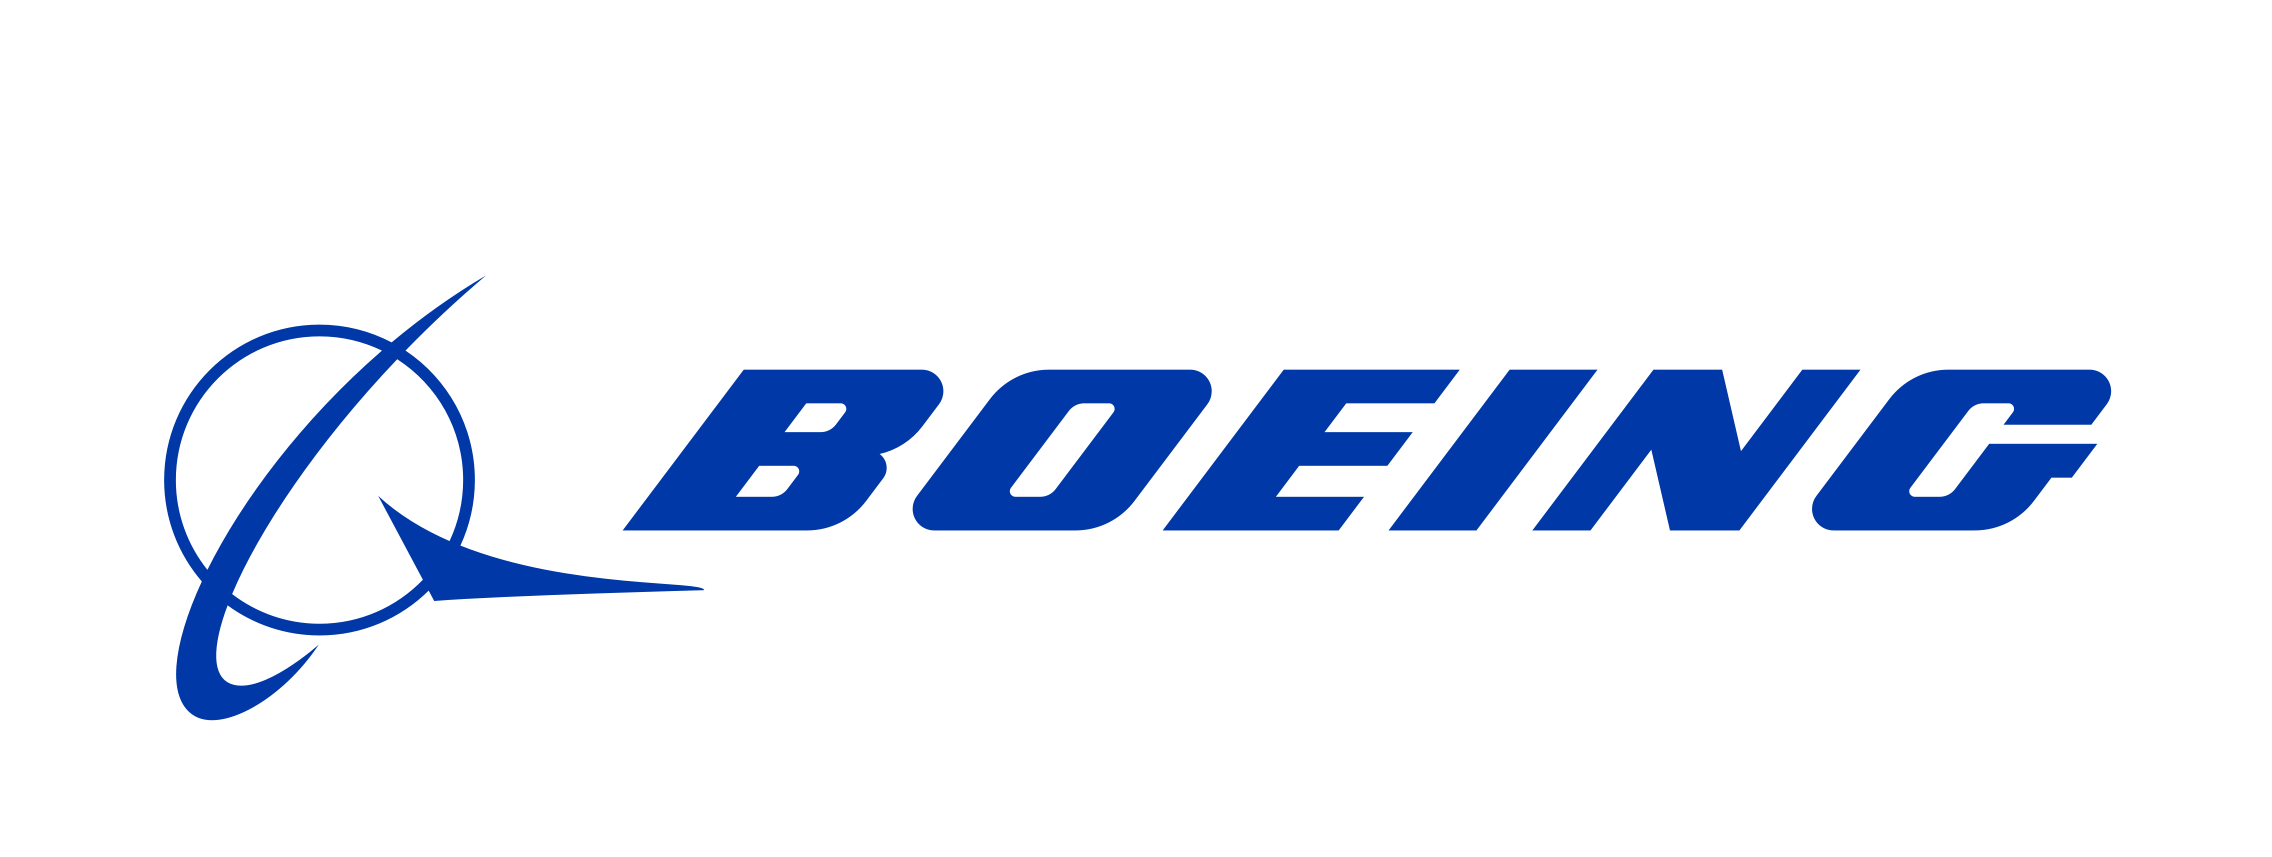 Us Aerospace Company Logo - Boeing: Boeing Australia - Home